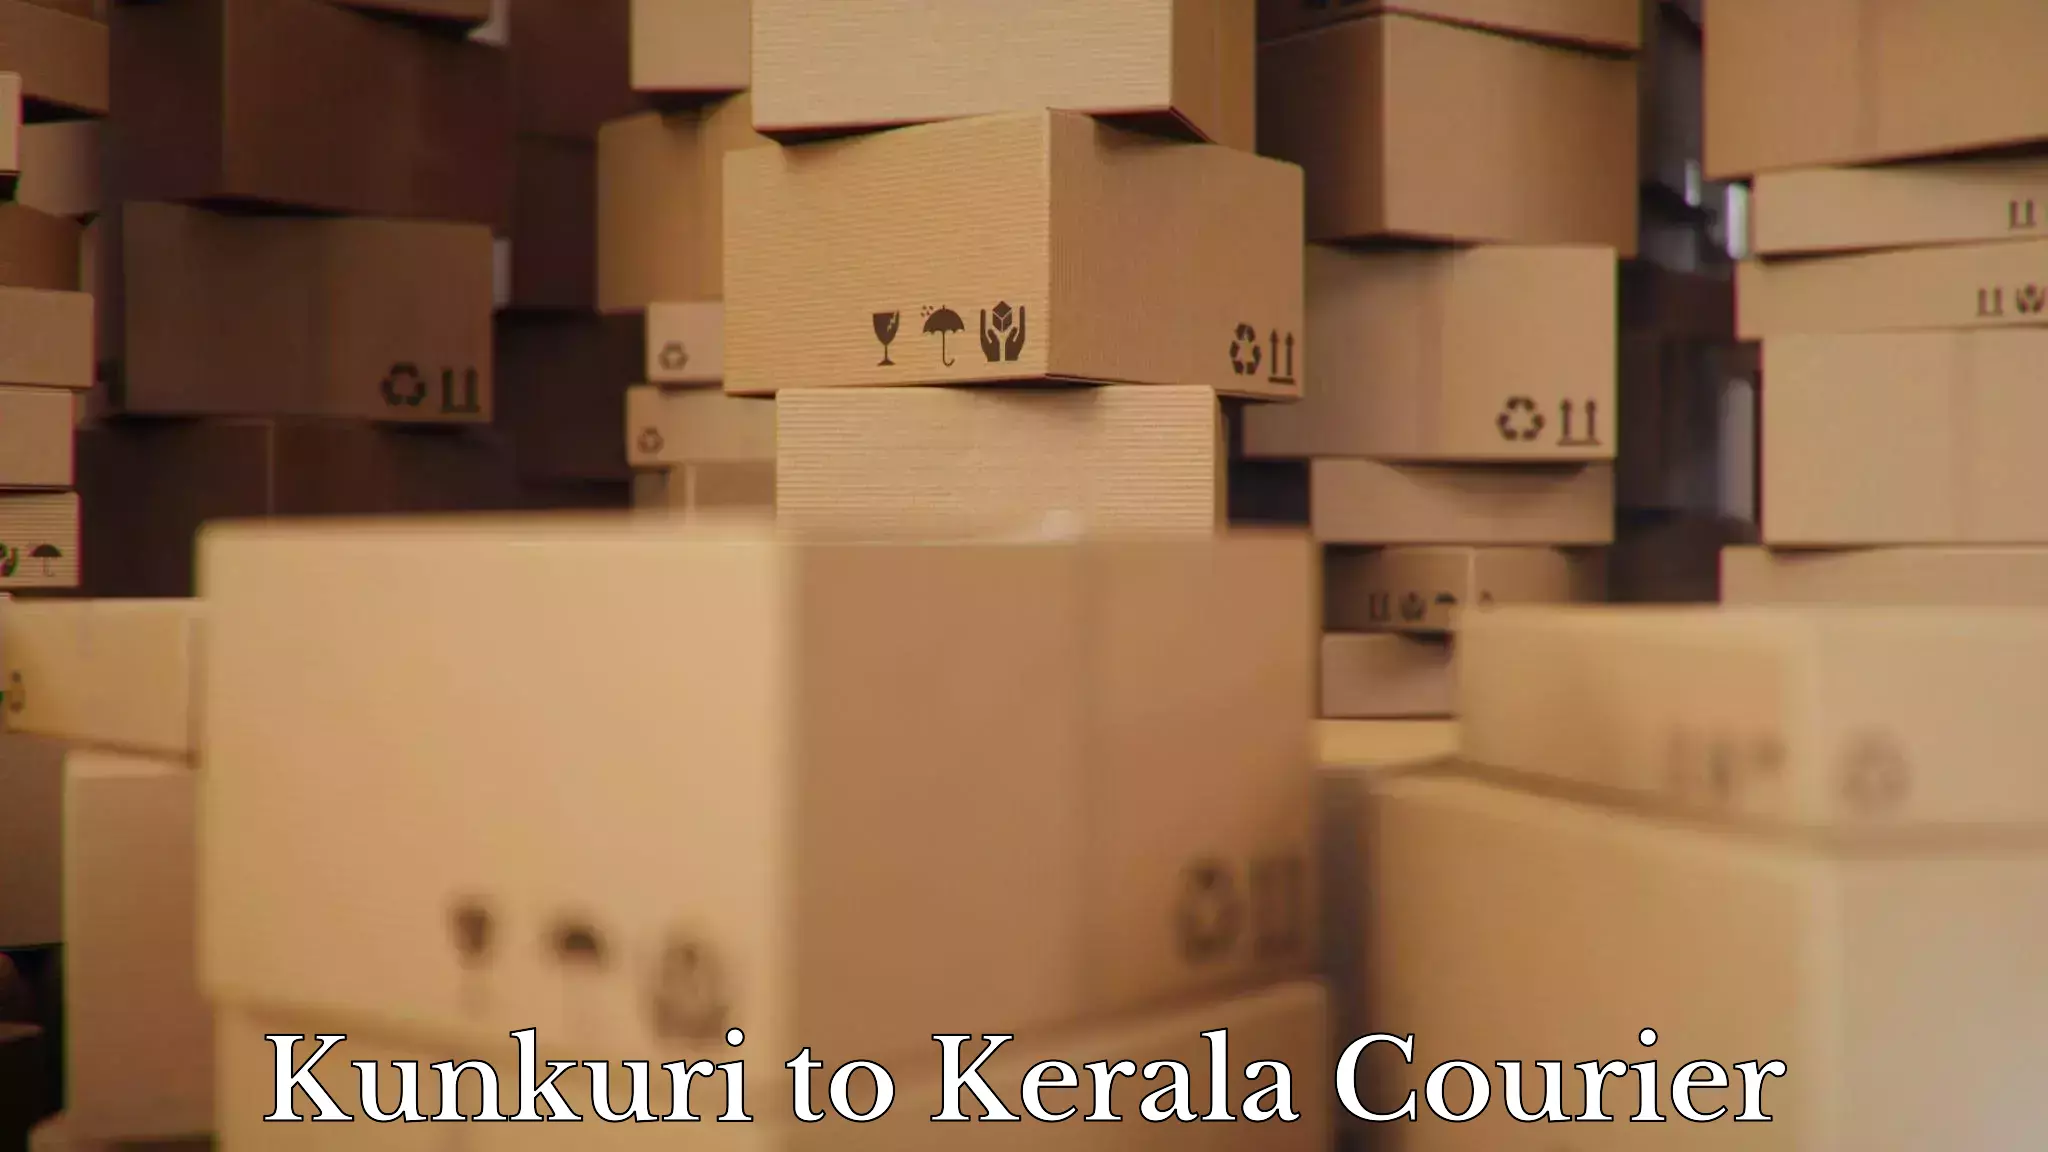 Budget-friendly movers Kunkuri to Kerala